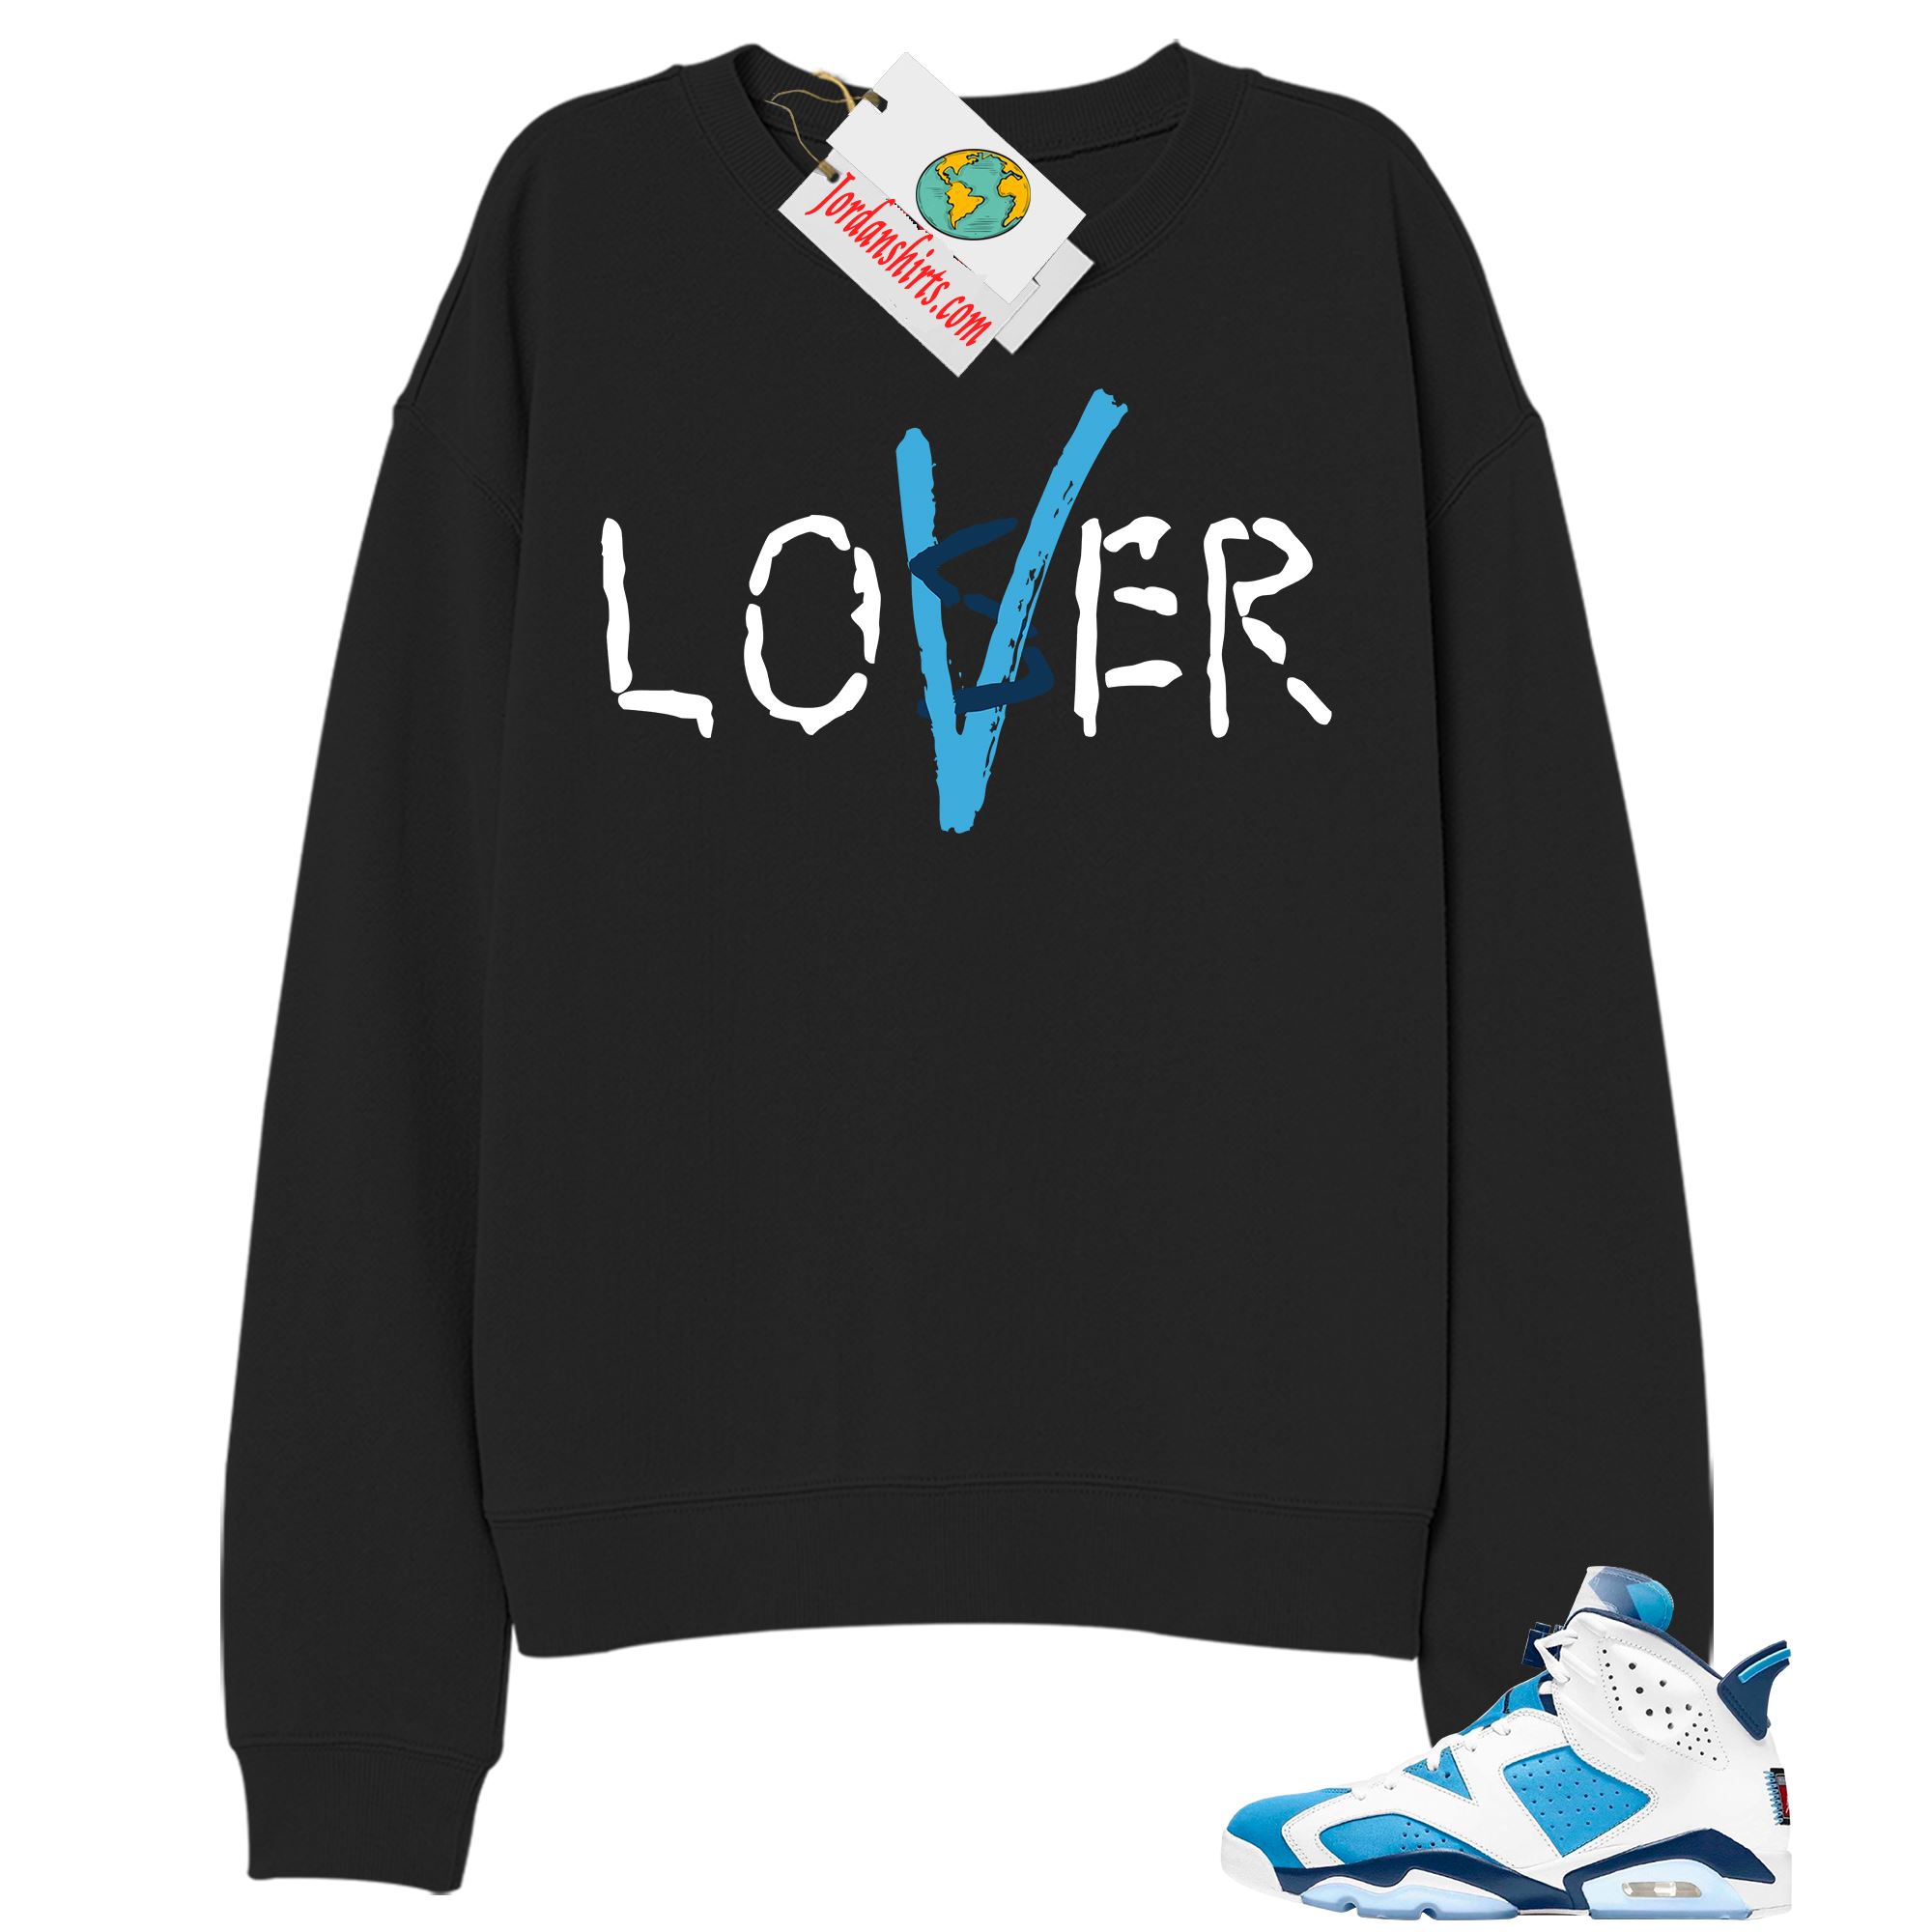 Jordan 6 Sweatshirt, Love A Loser Black Sweatshirt Air Jordan 6 Unc 6s Full Size Up To 5xl